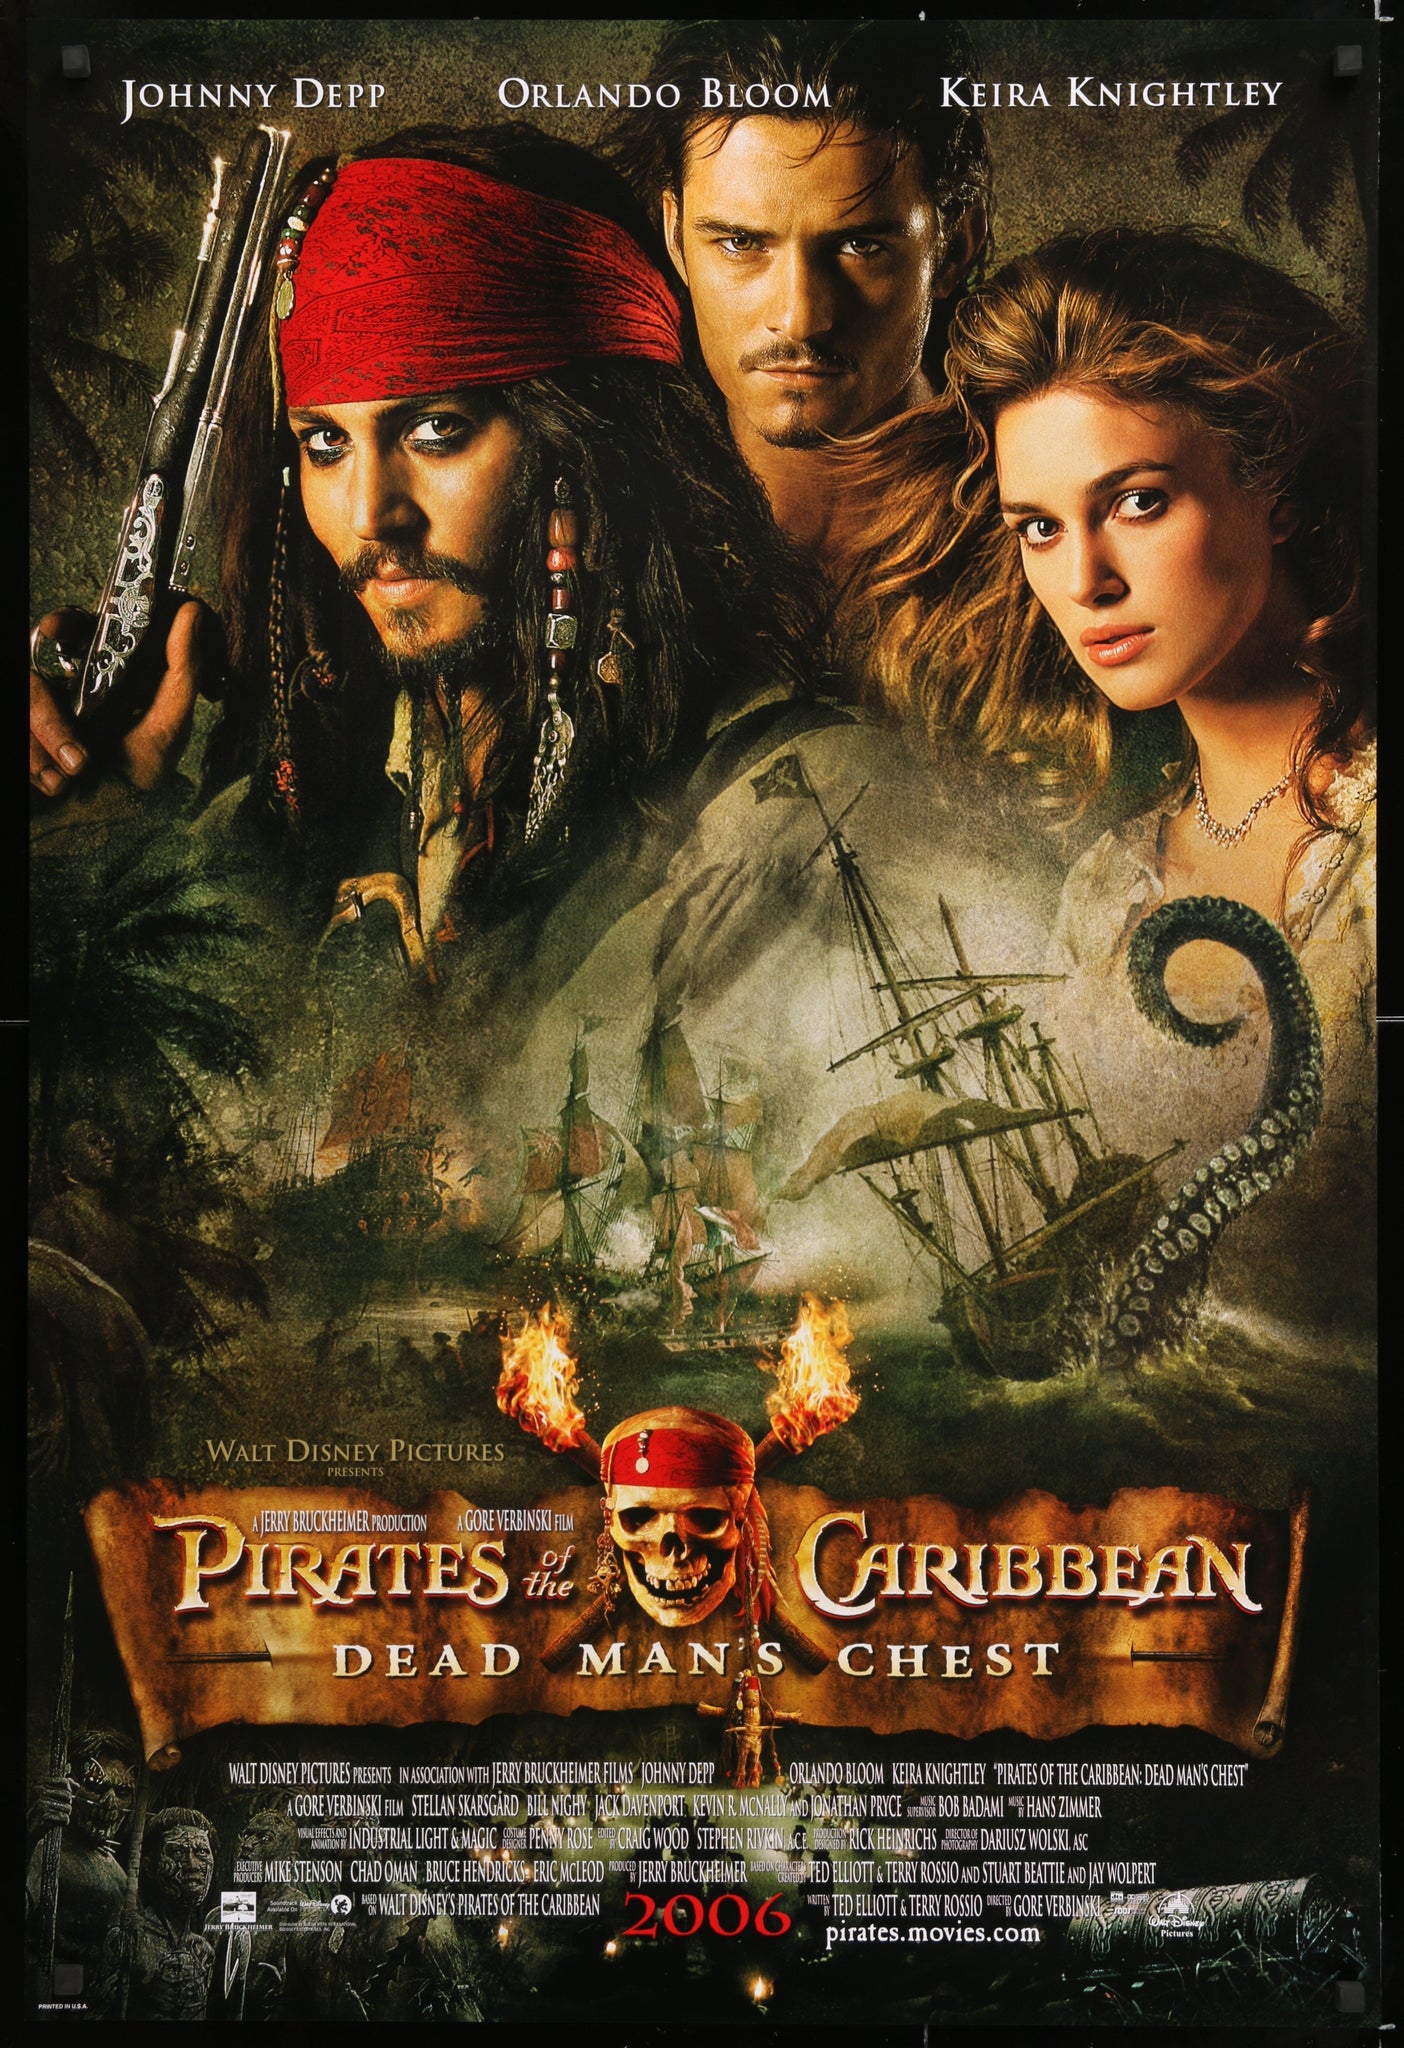 pirates_of_the_caribbean_dead_mans_chest_advance_intl_EB05221_B-222936_1024x1024@2x.jpg